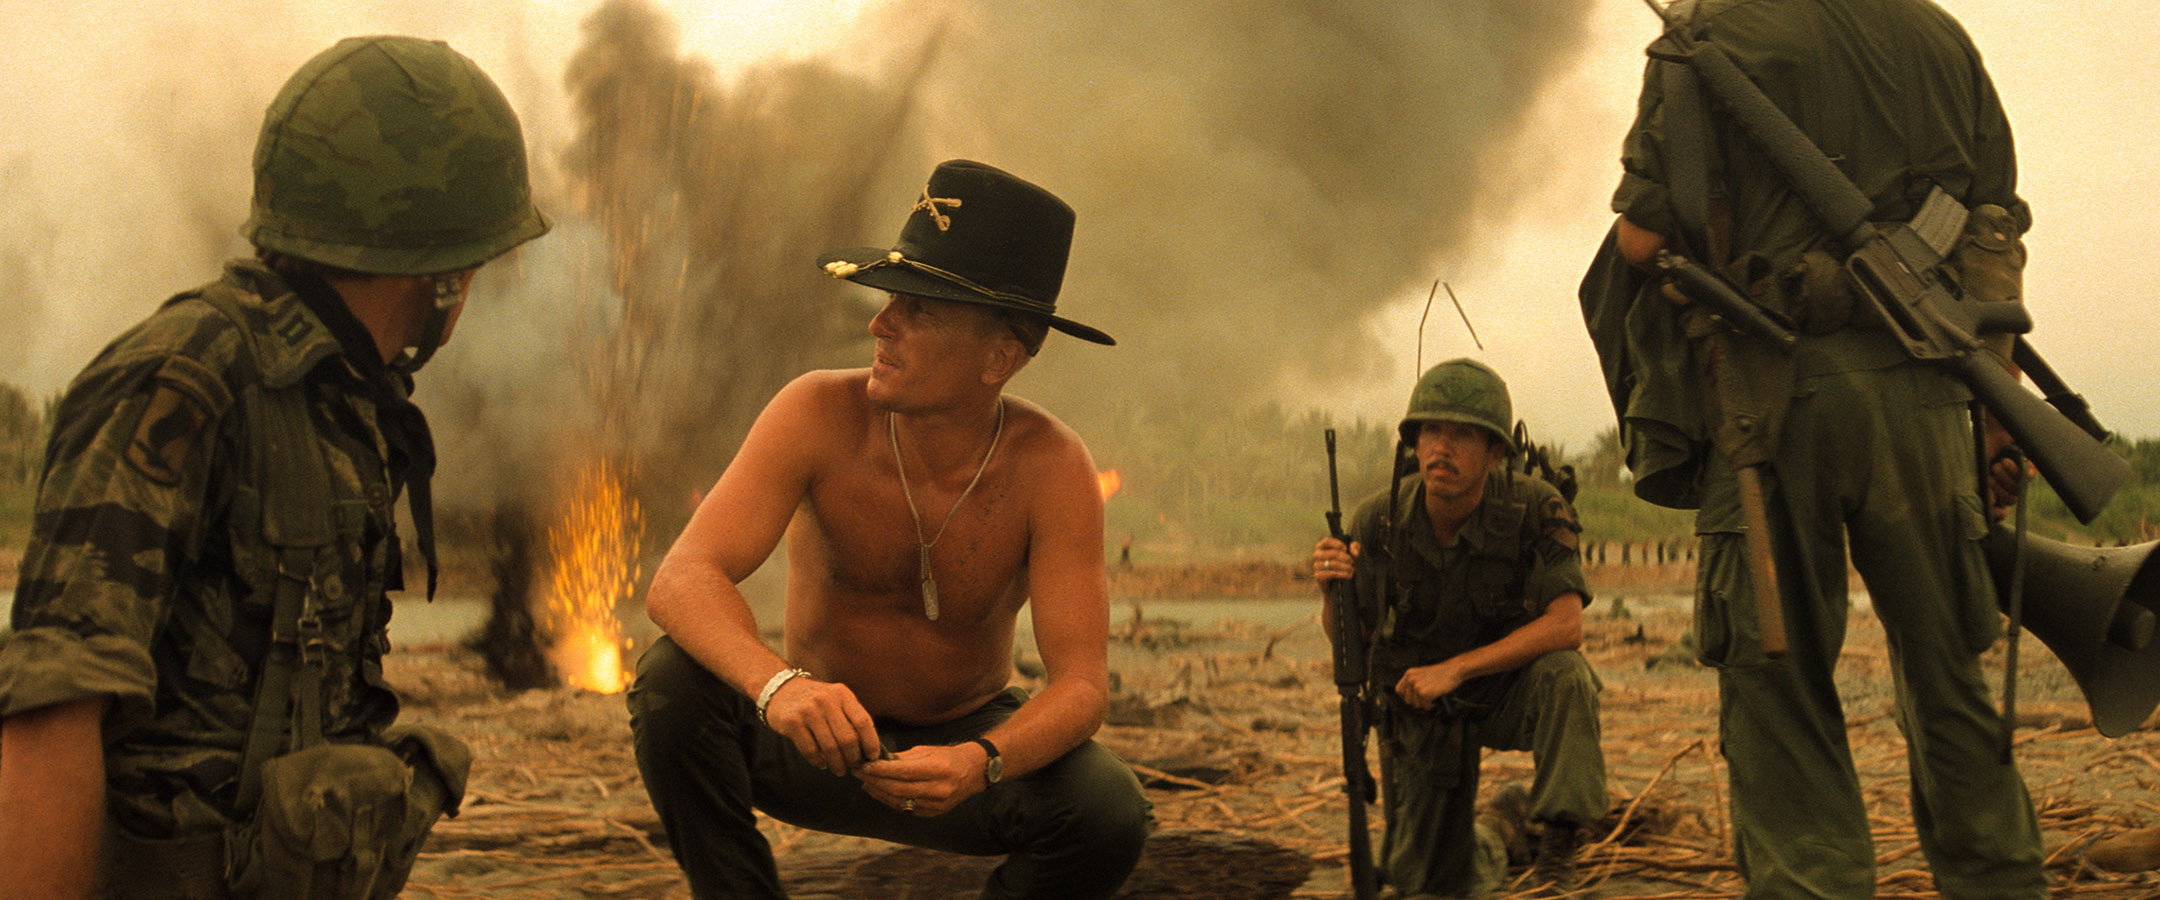 Apocalypse Now de Francis Ford Coppola